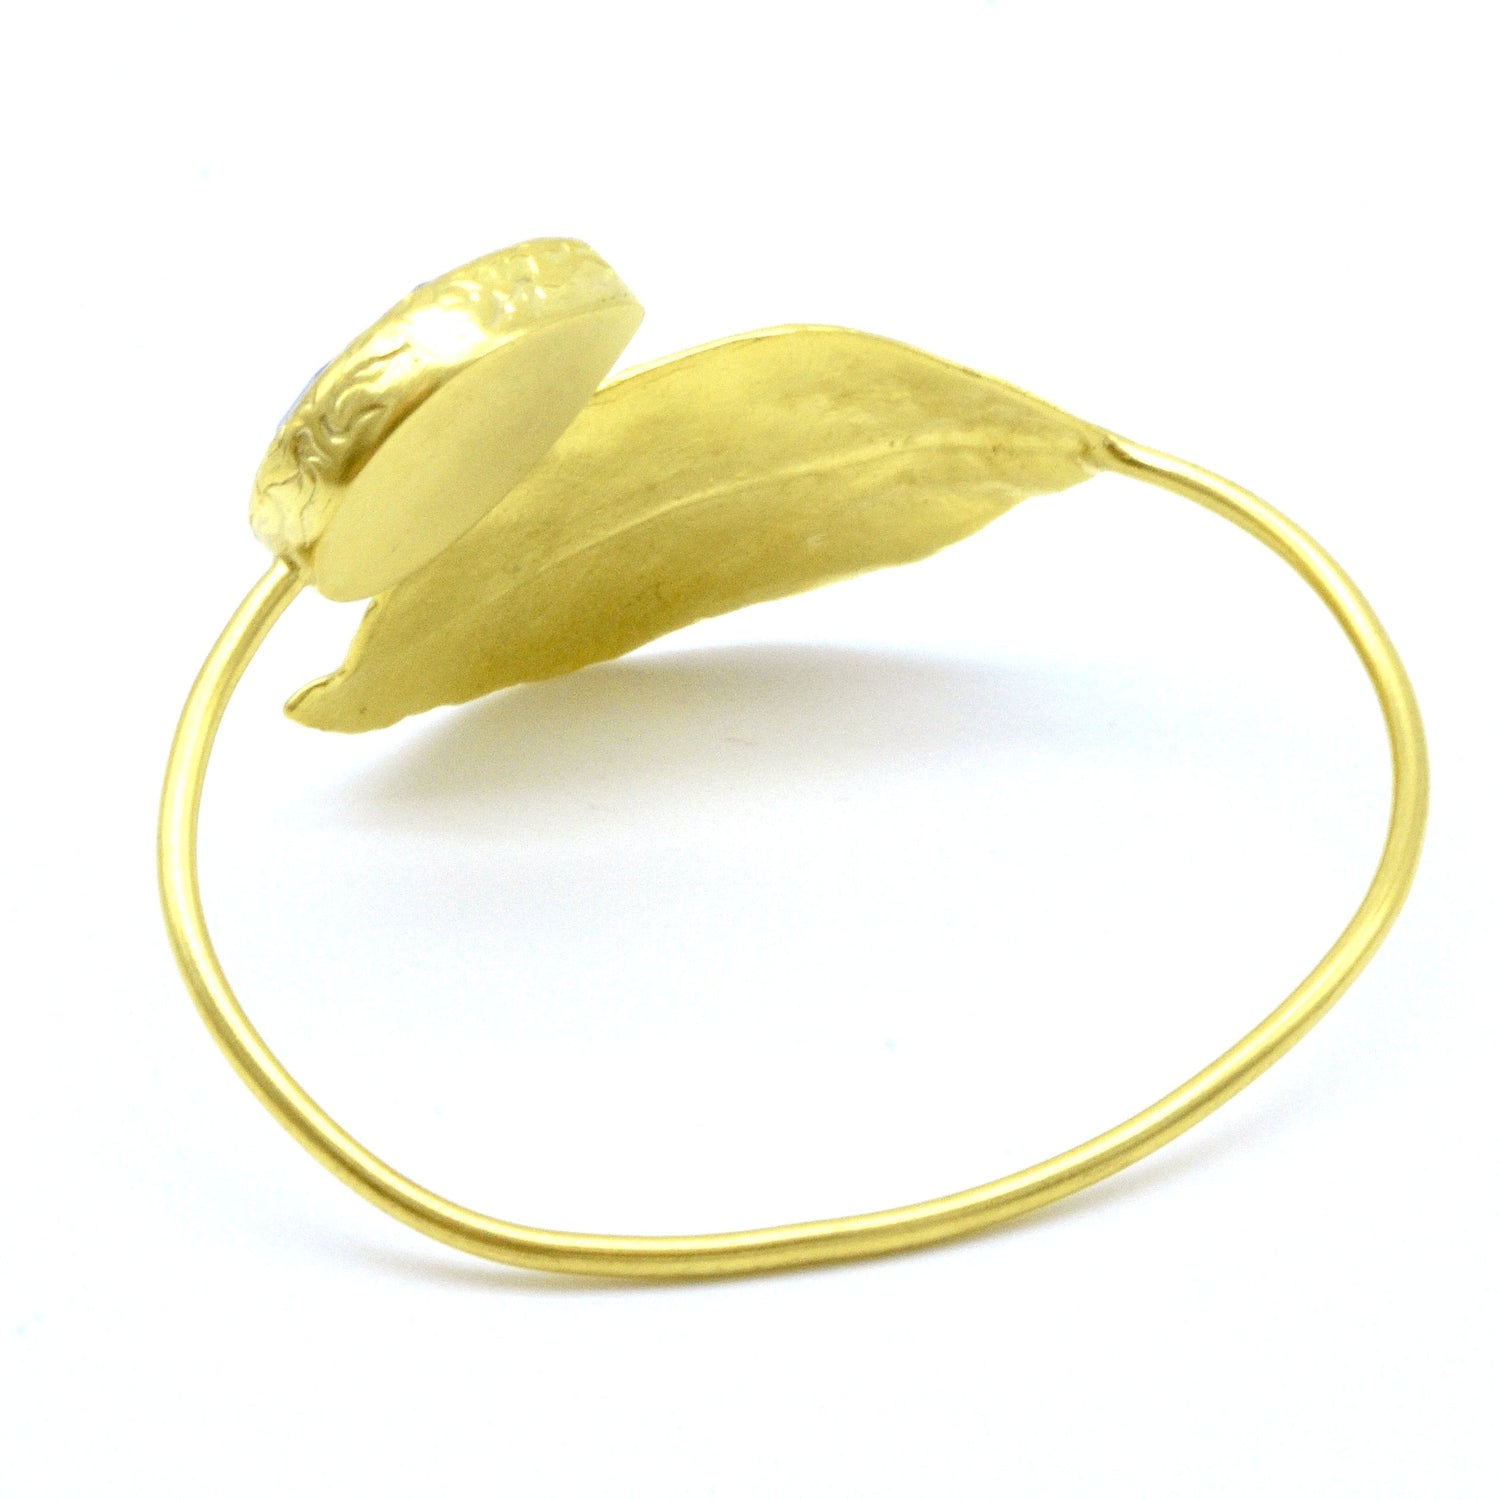 Aylas Rose quartz cuff/ bracelet - Gold plated semi precious gemstone - Handmade in Ottoman Style